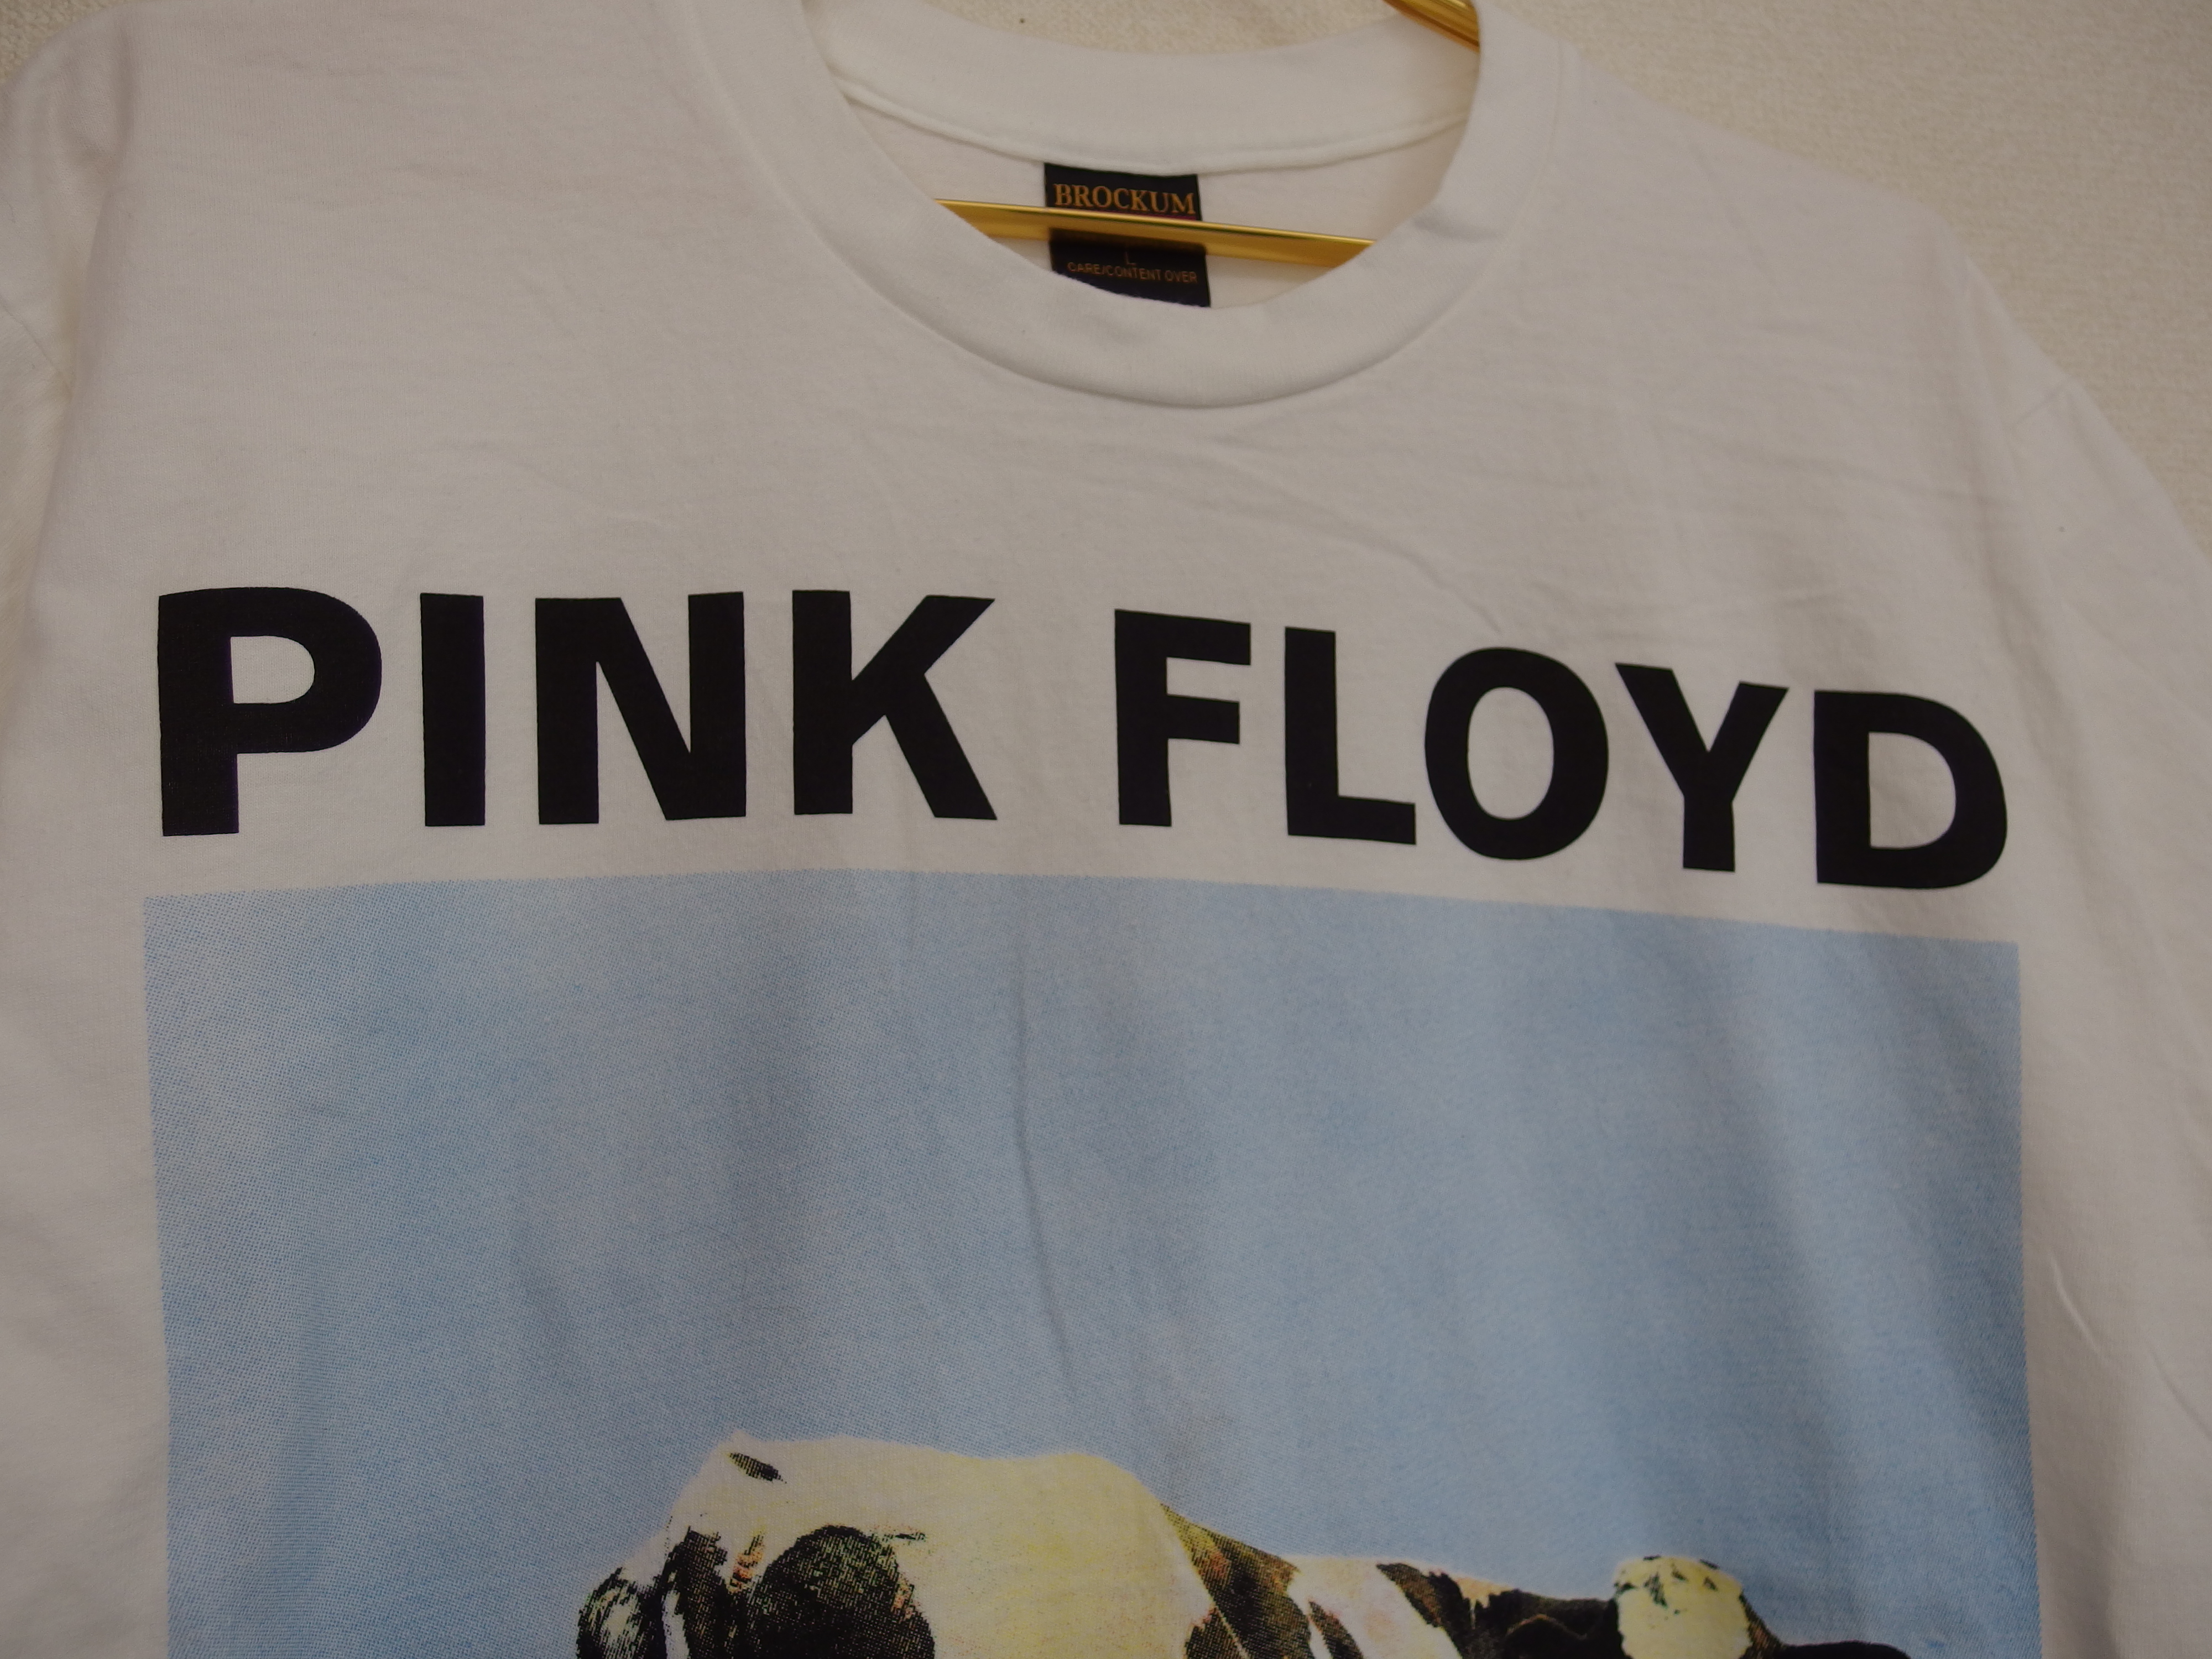 PINK FLOYD ピンクフロイド Tシャツ ホワイト Lサイズ 中古品 美品